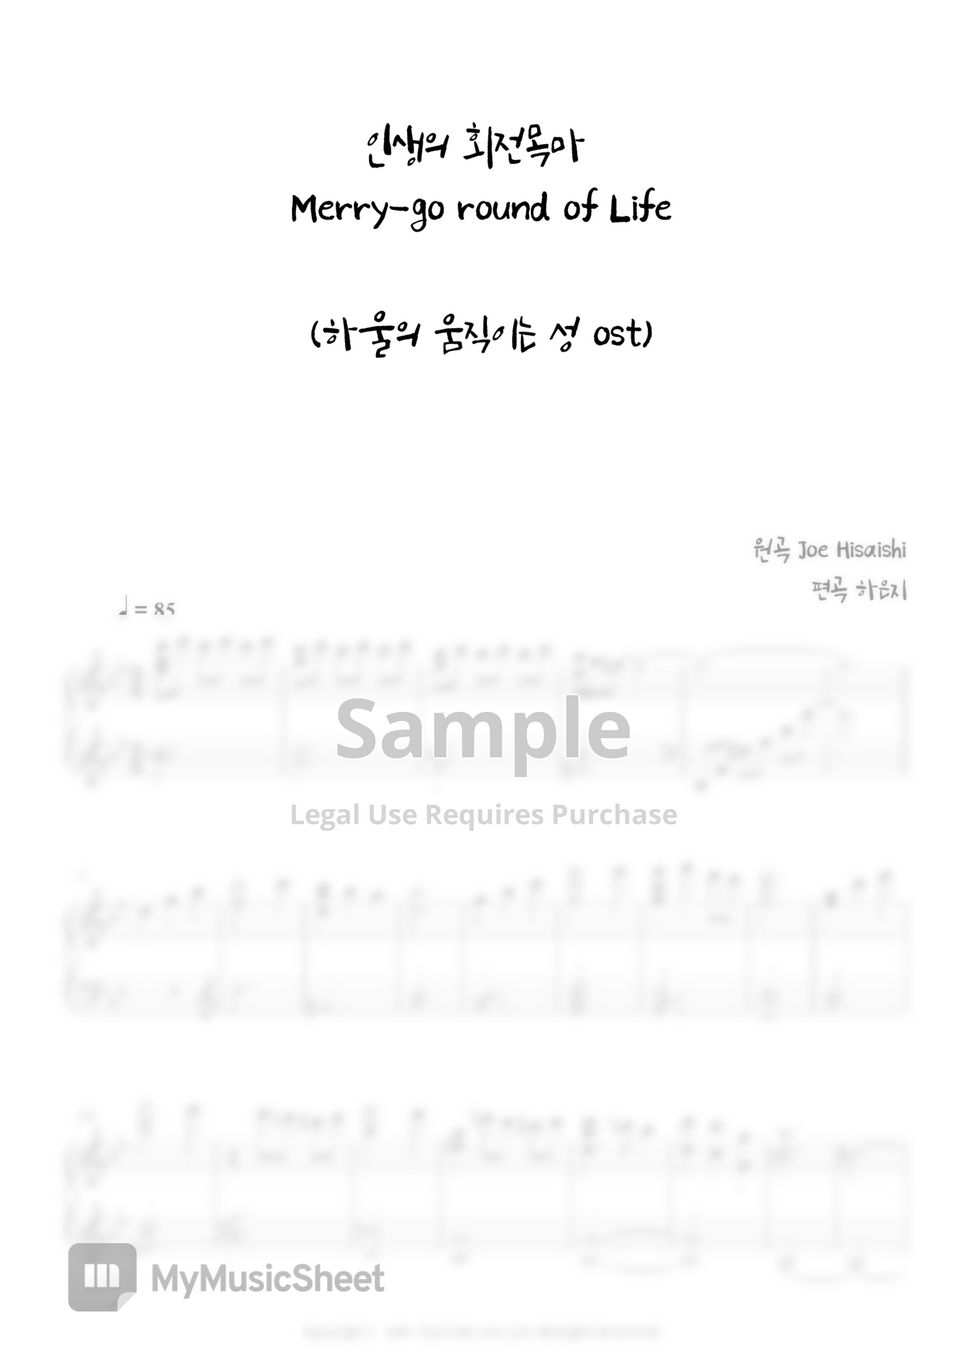 Joe Hisaishi - Merry Go Round of Life (Sad Version) ♬ by 하은지 (Ha EunJee)